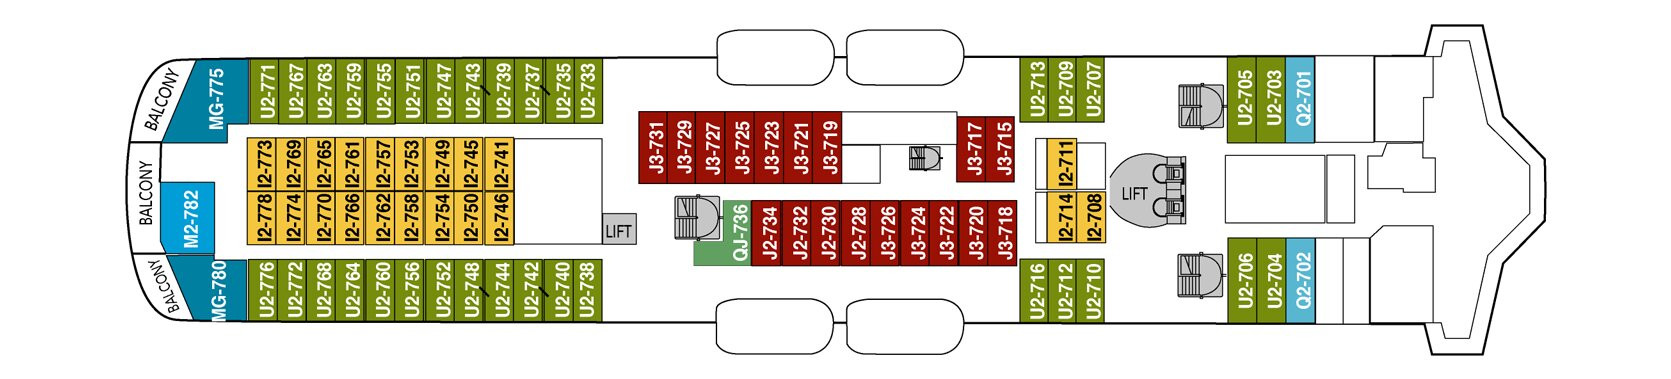 1548636366.4902_d267_Hurtigruten MS Midnatsol Deck Plans Deck 7.png